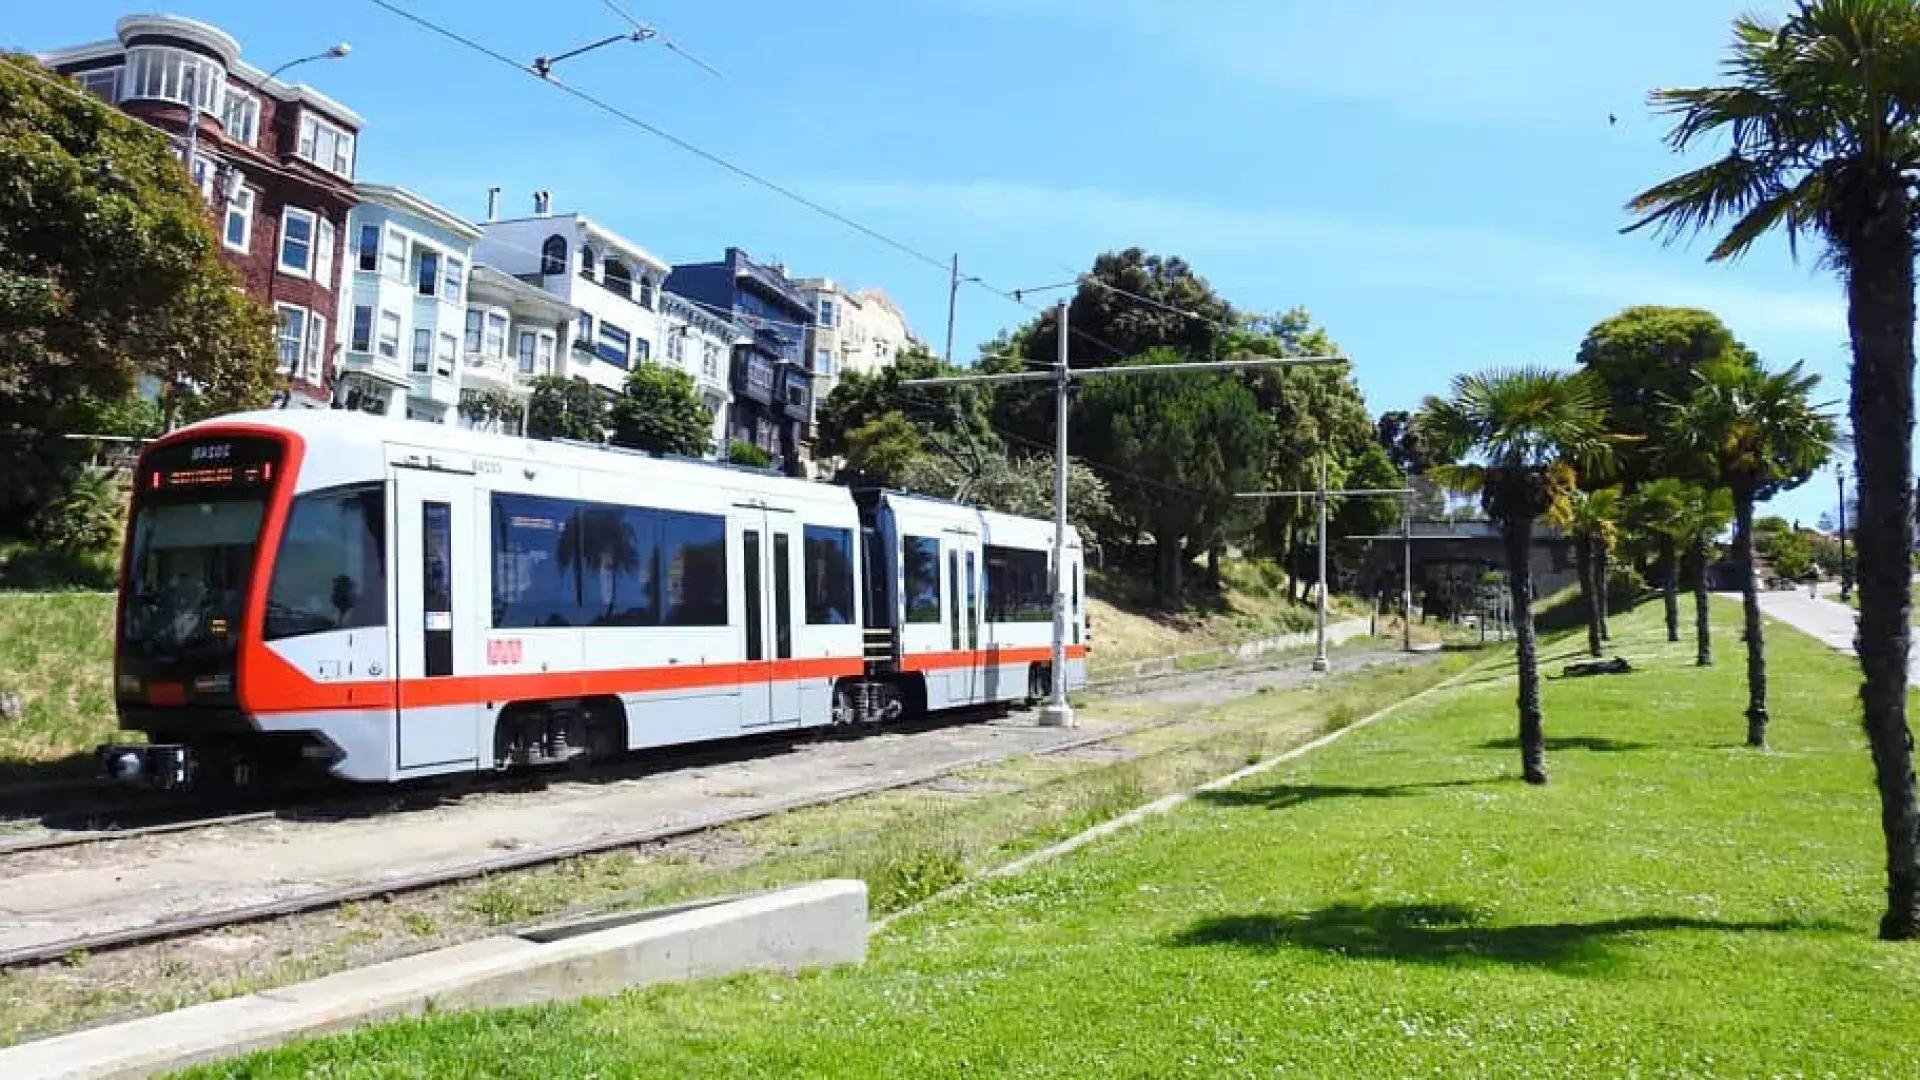 A MUNI passenger train runs along a track in San Francisco.